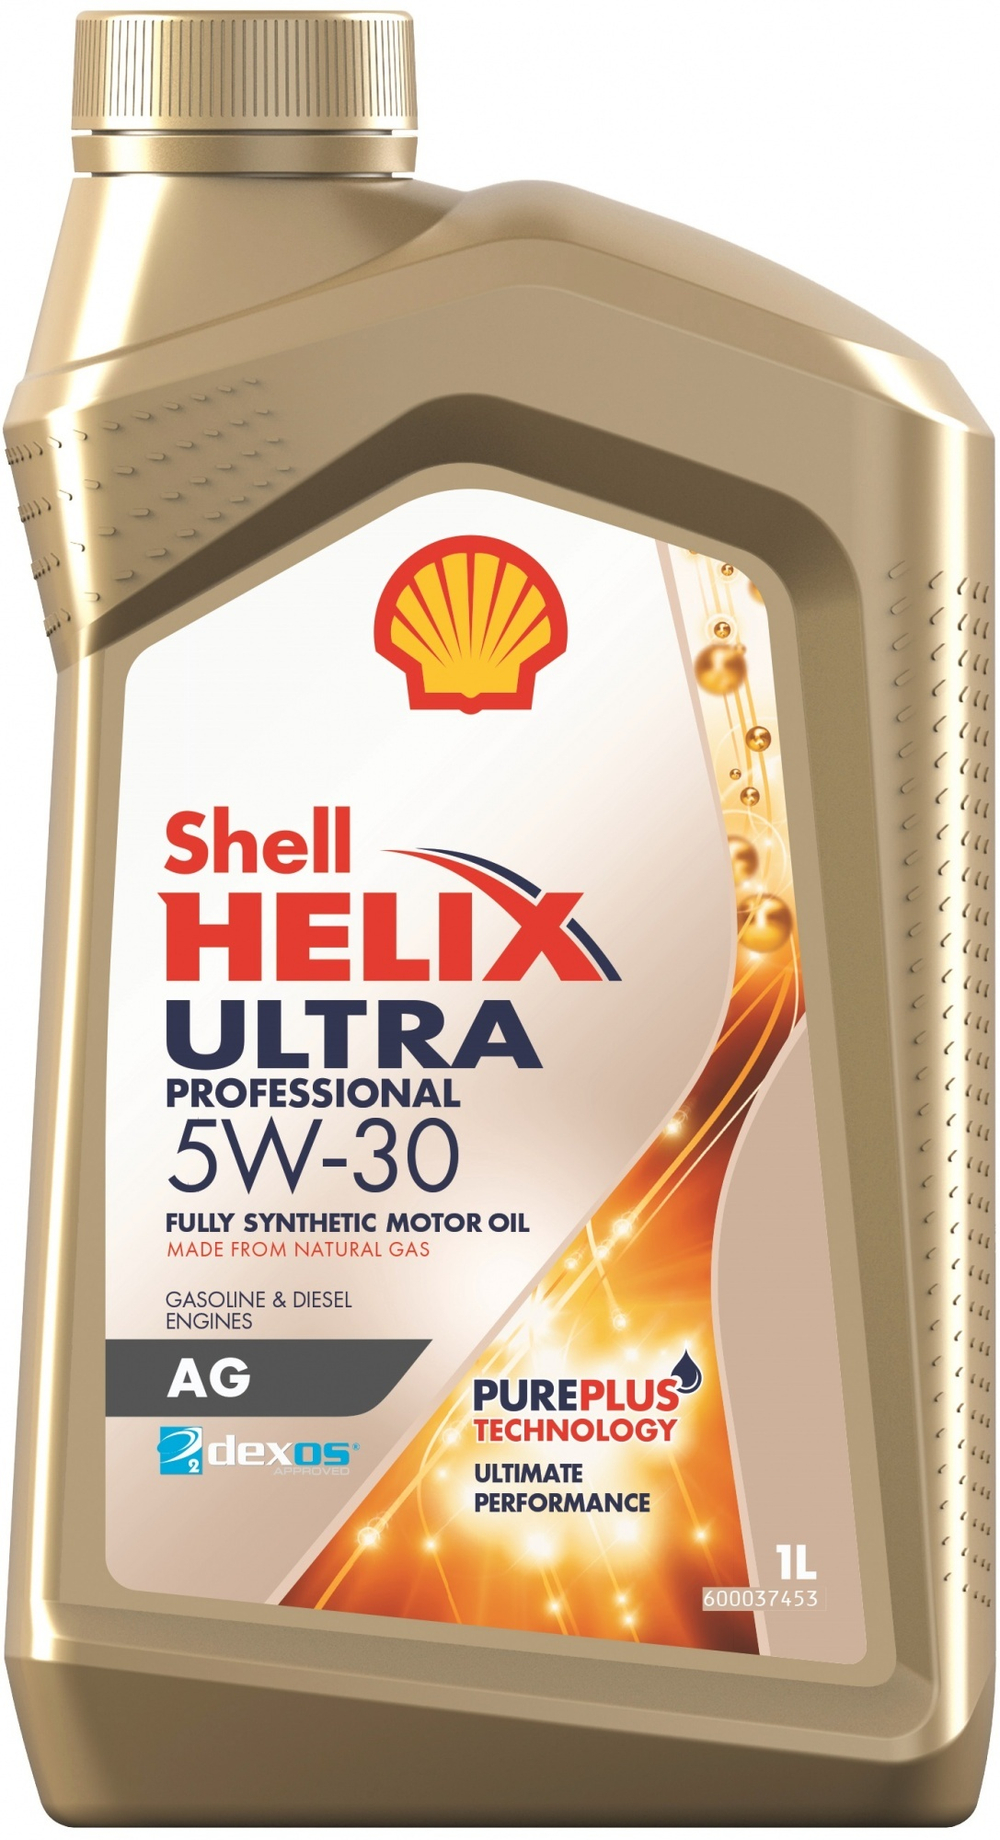 Shell Helix Ultra Professional AG 5W-30 209 л